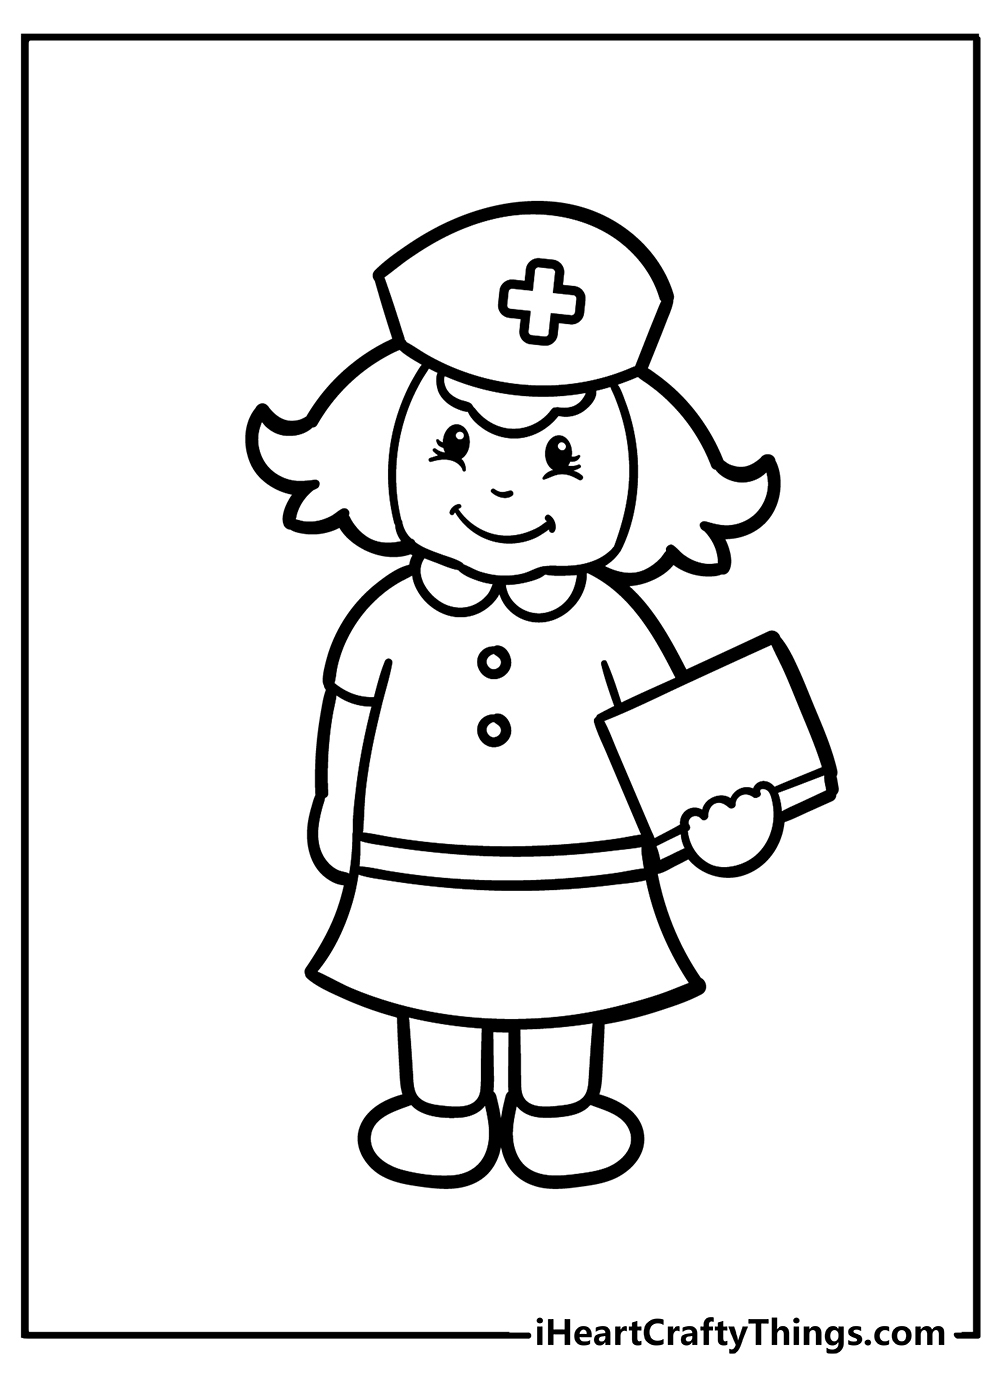 Nurse coloring pages free printables